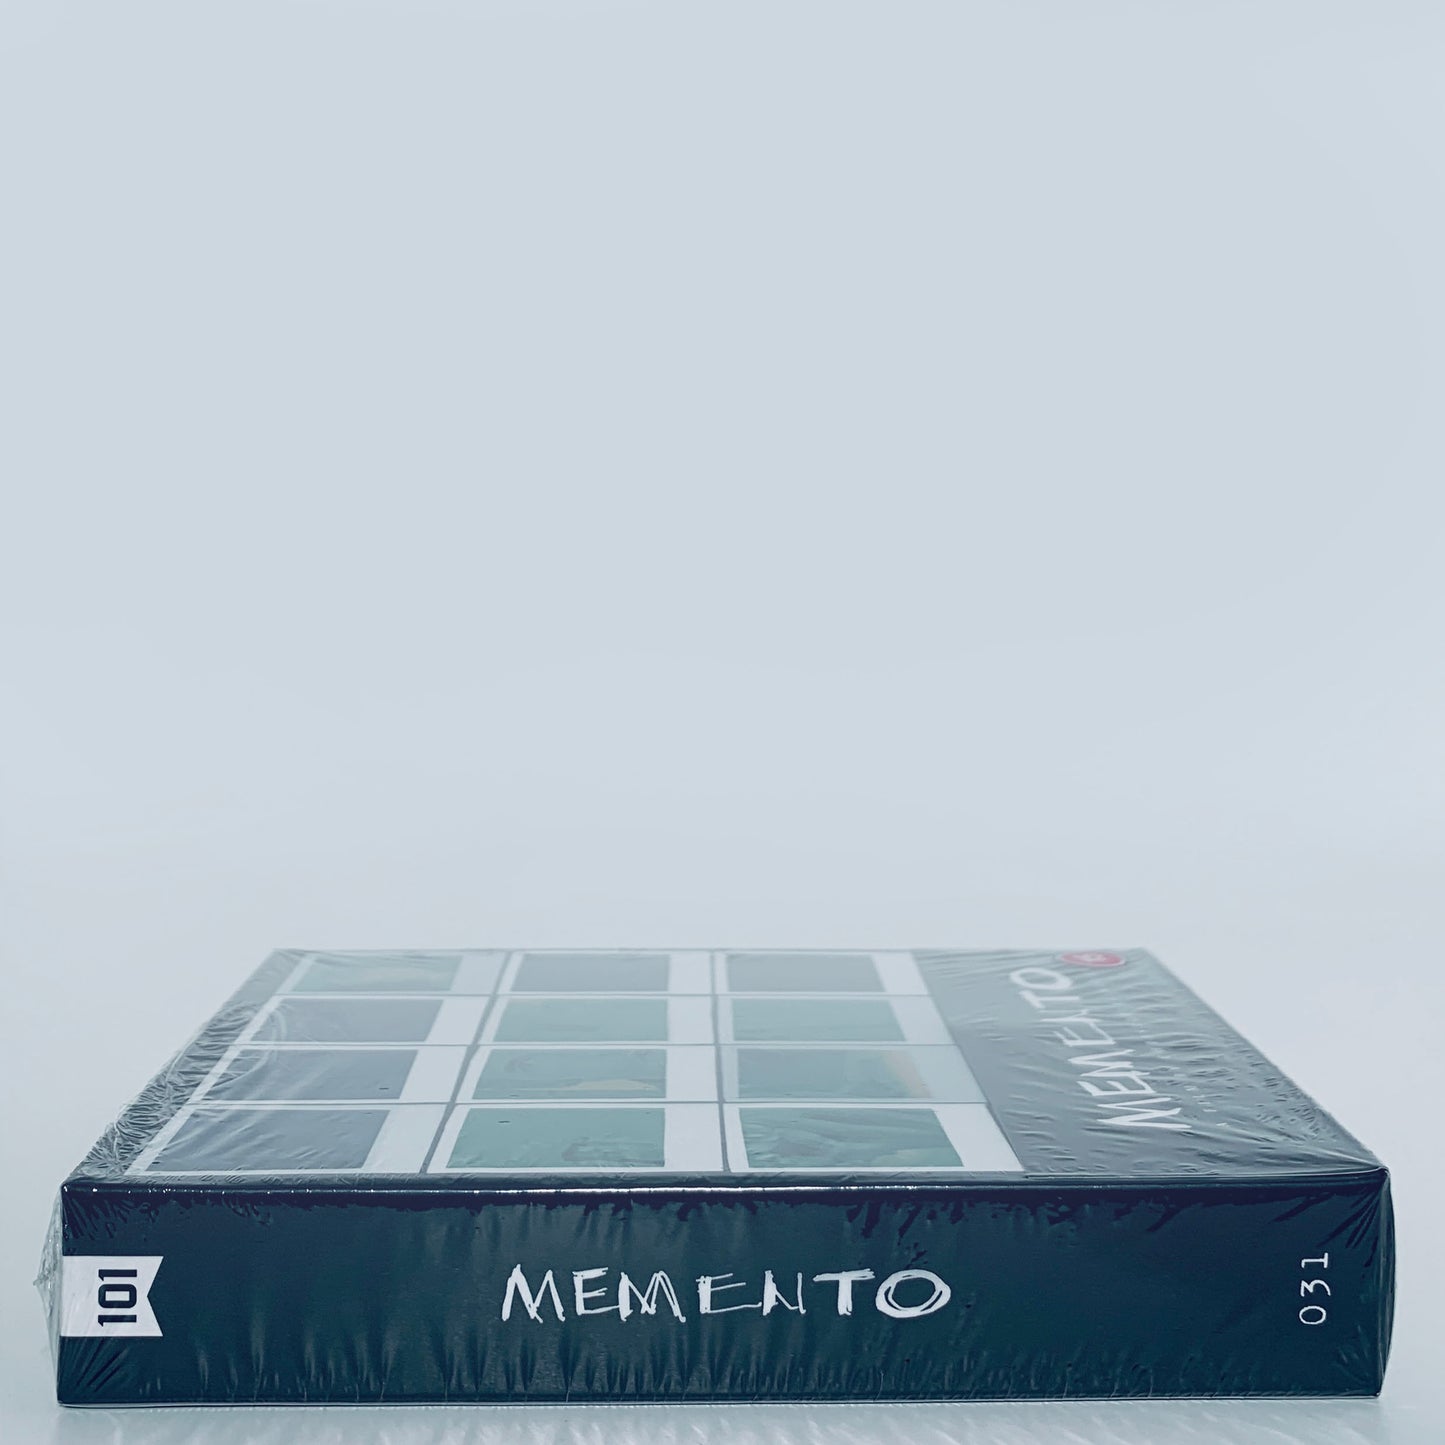 Memento Christopher Nolan Region B Blu-ray 101 Films Limited Edition